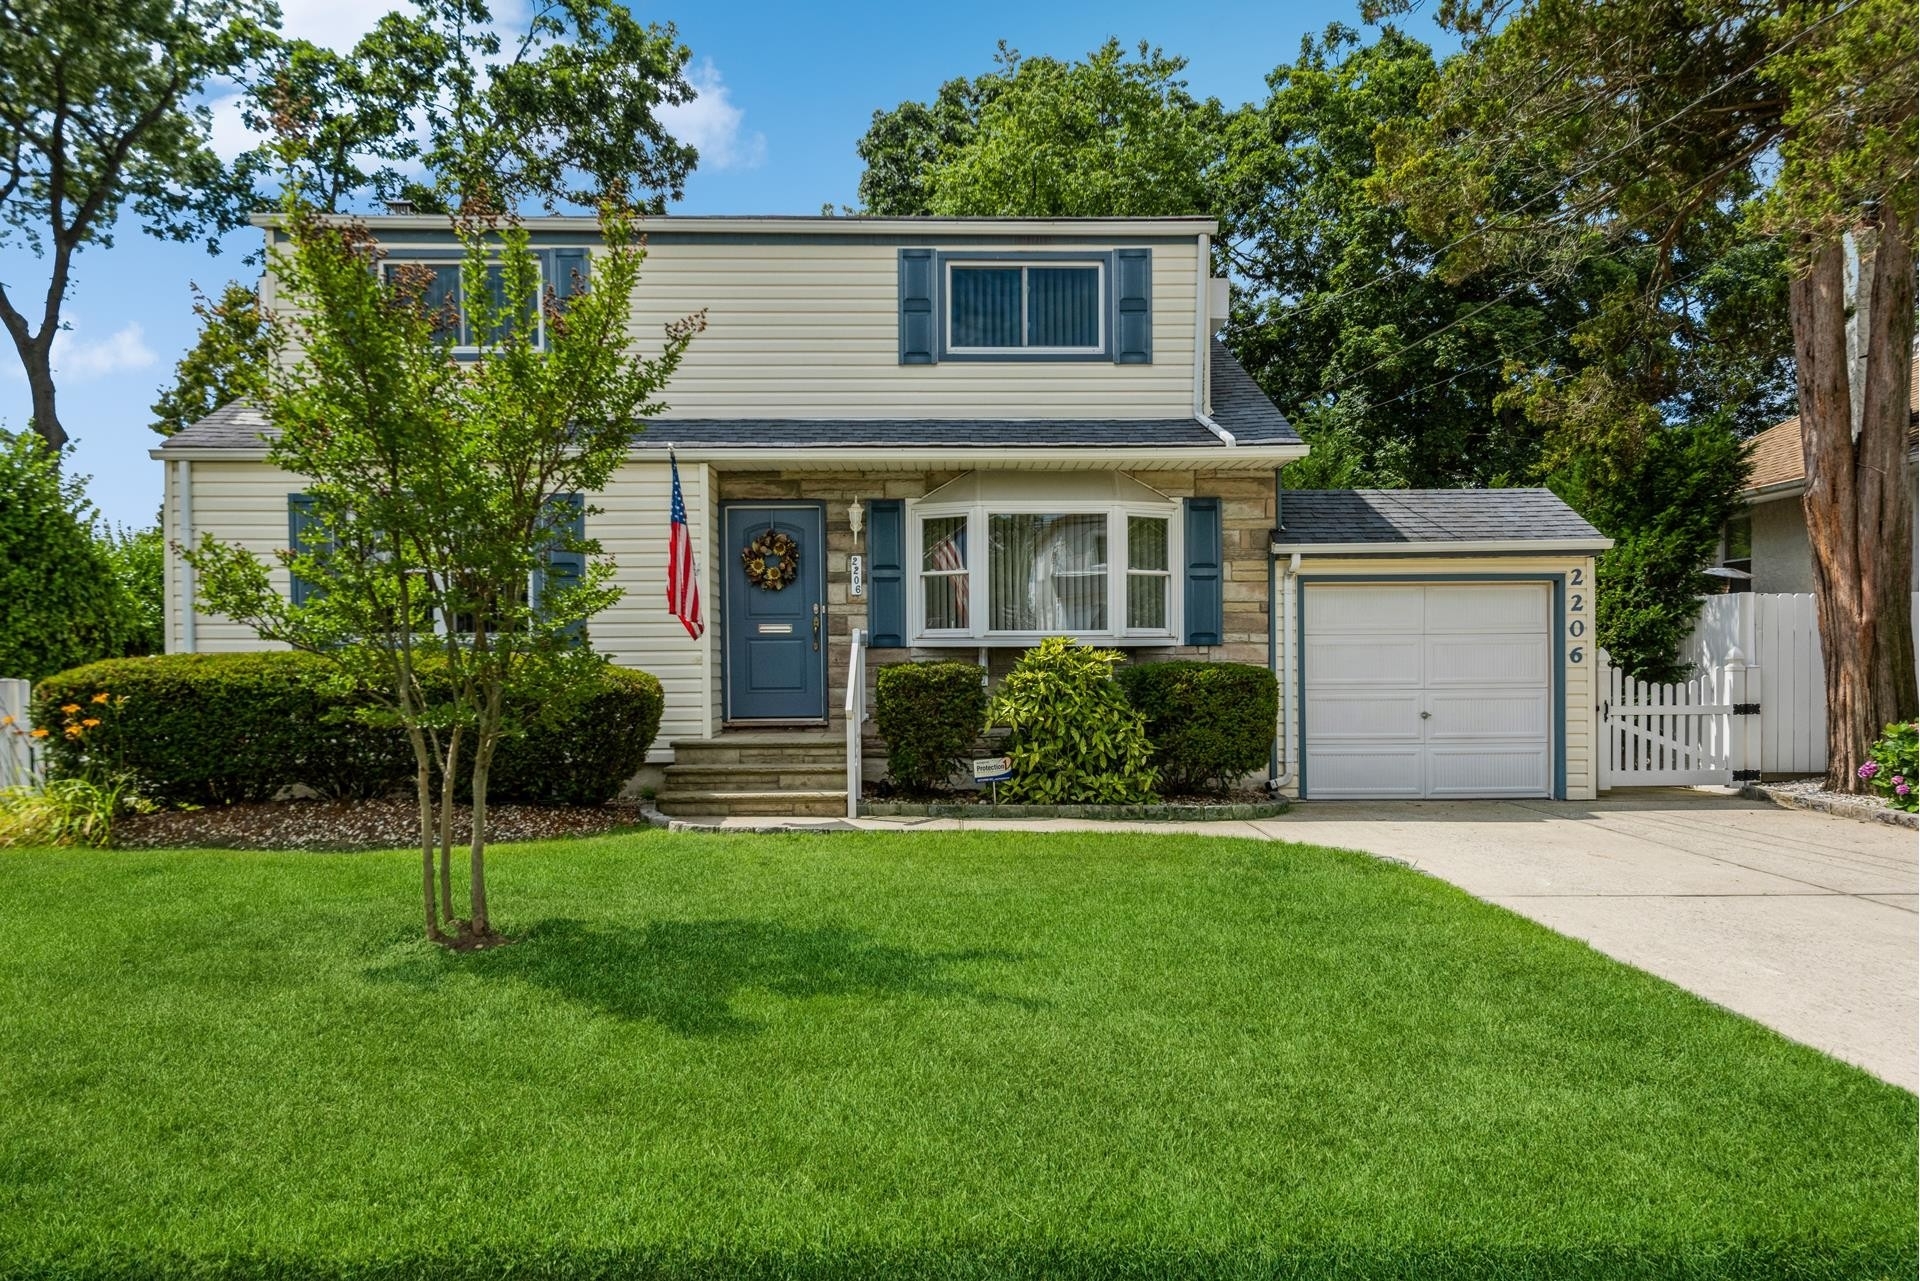 Single Family Home for Sale at North Merrick, Merrick, NY 11566